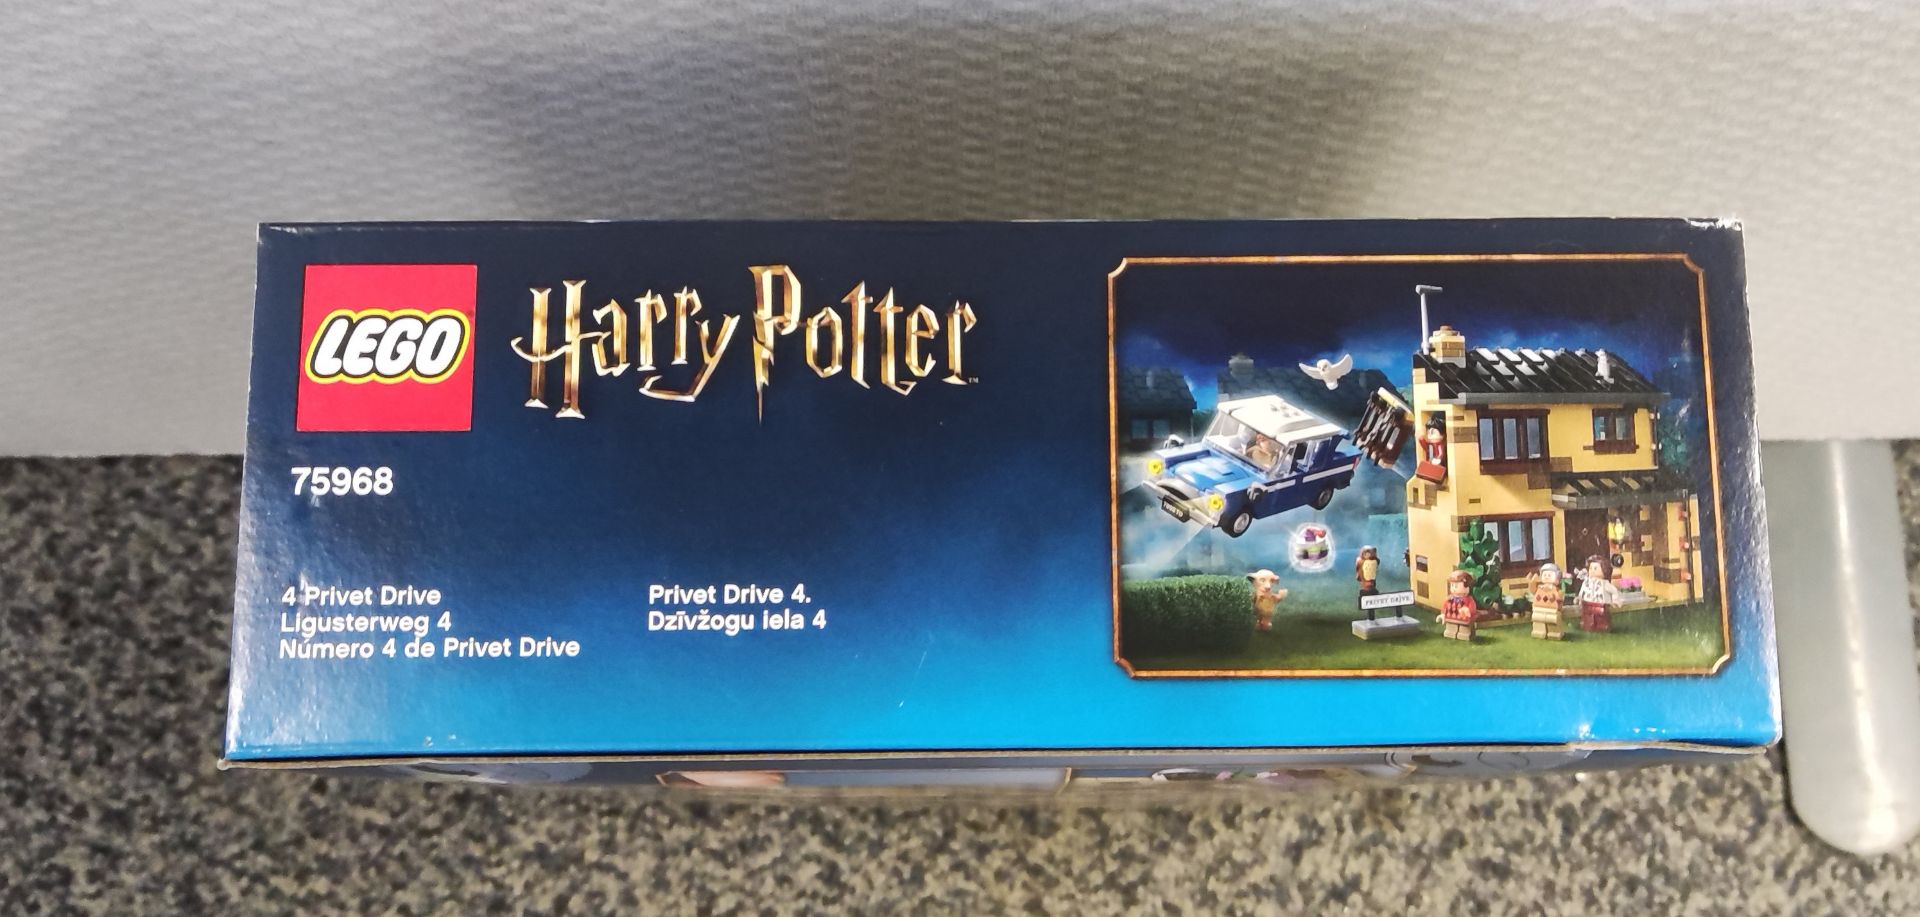 1 x Lego Harry Potter 4 Privet Drive - Set # 75968 - New/Boxed - Image 7 of 8